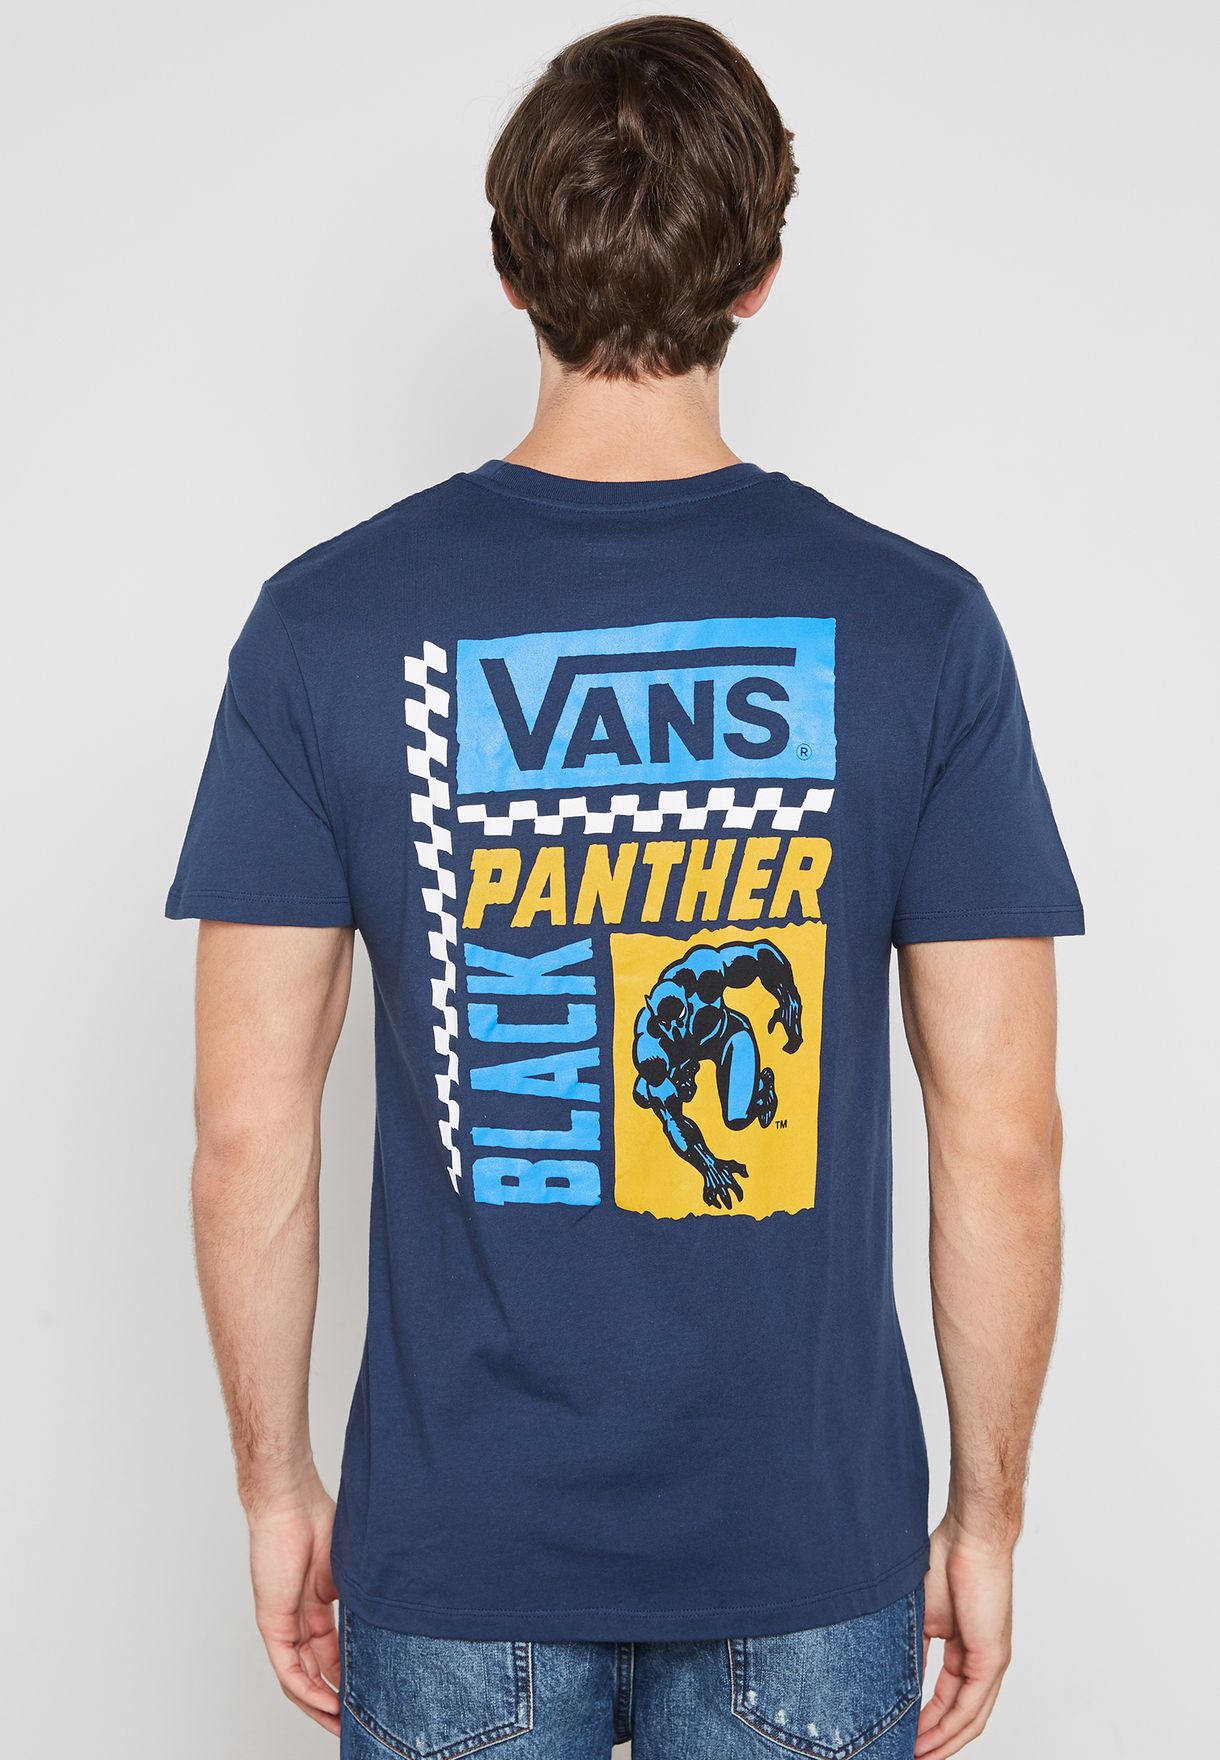 black panther vans shirt